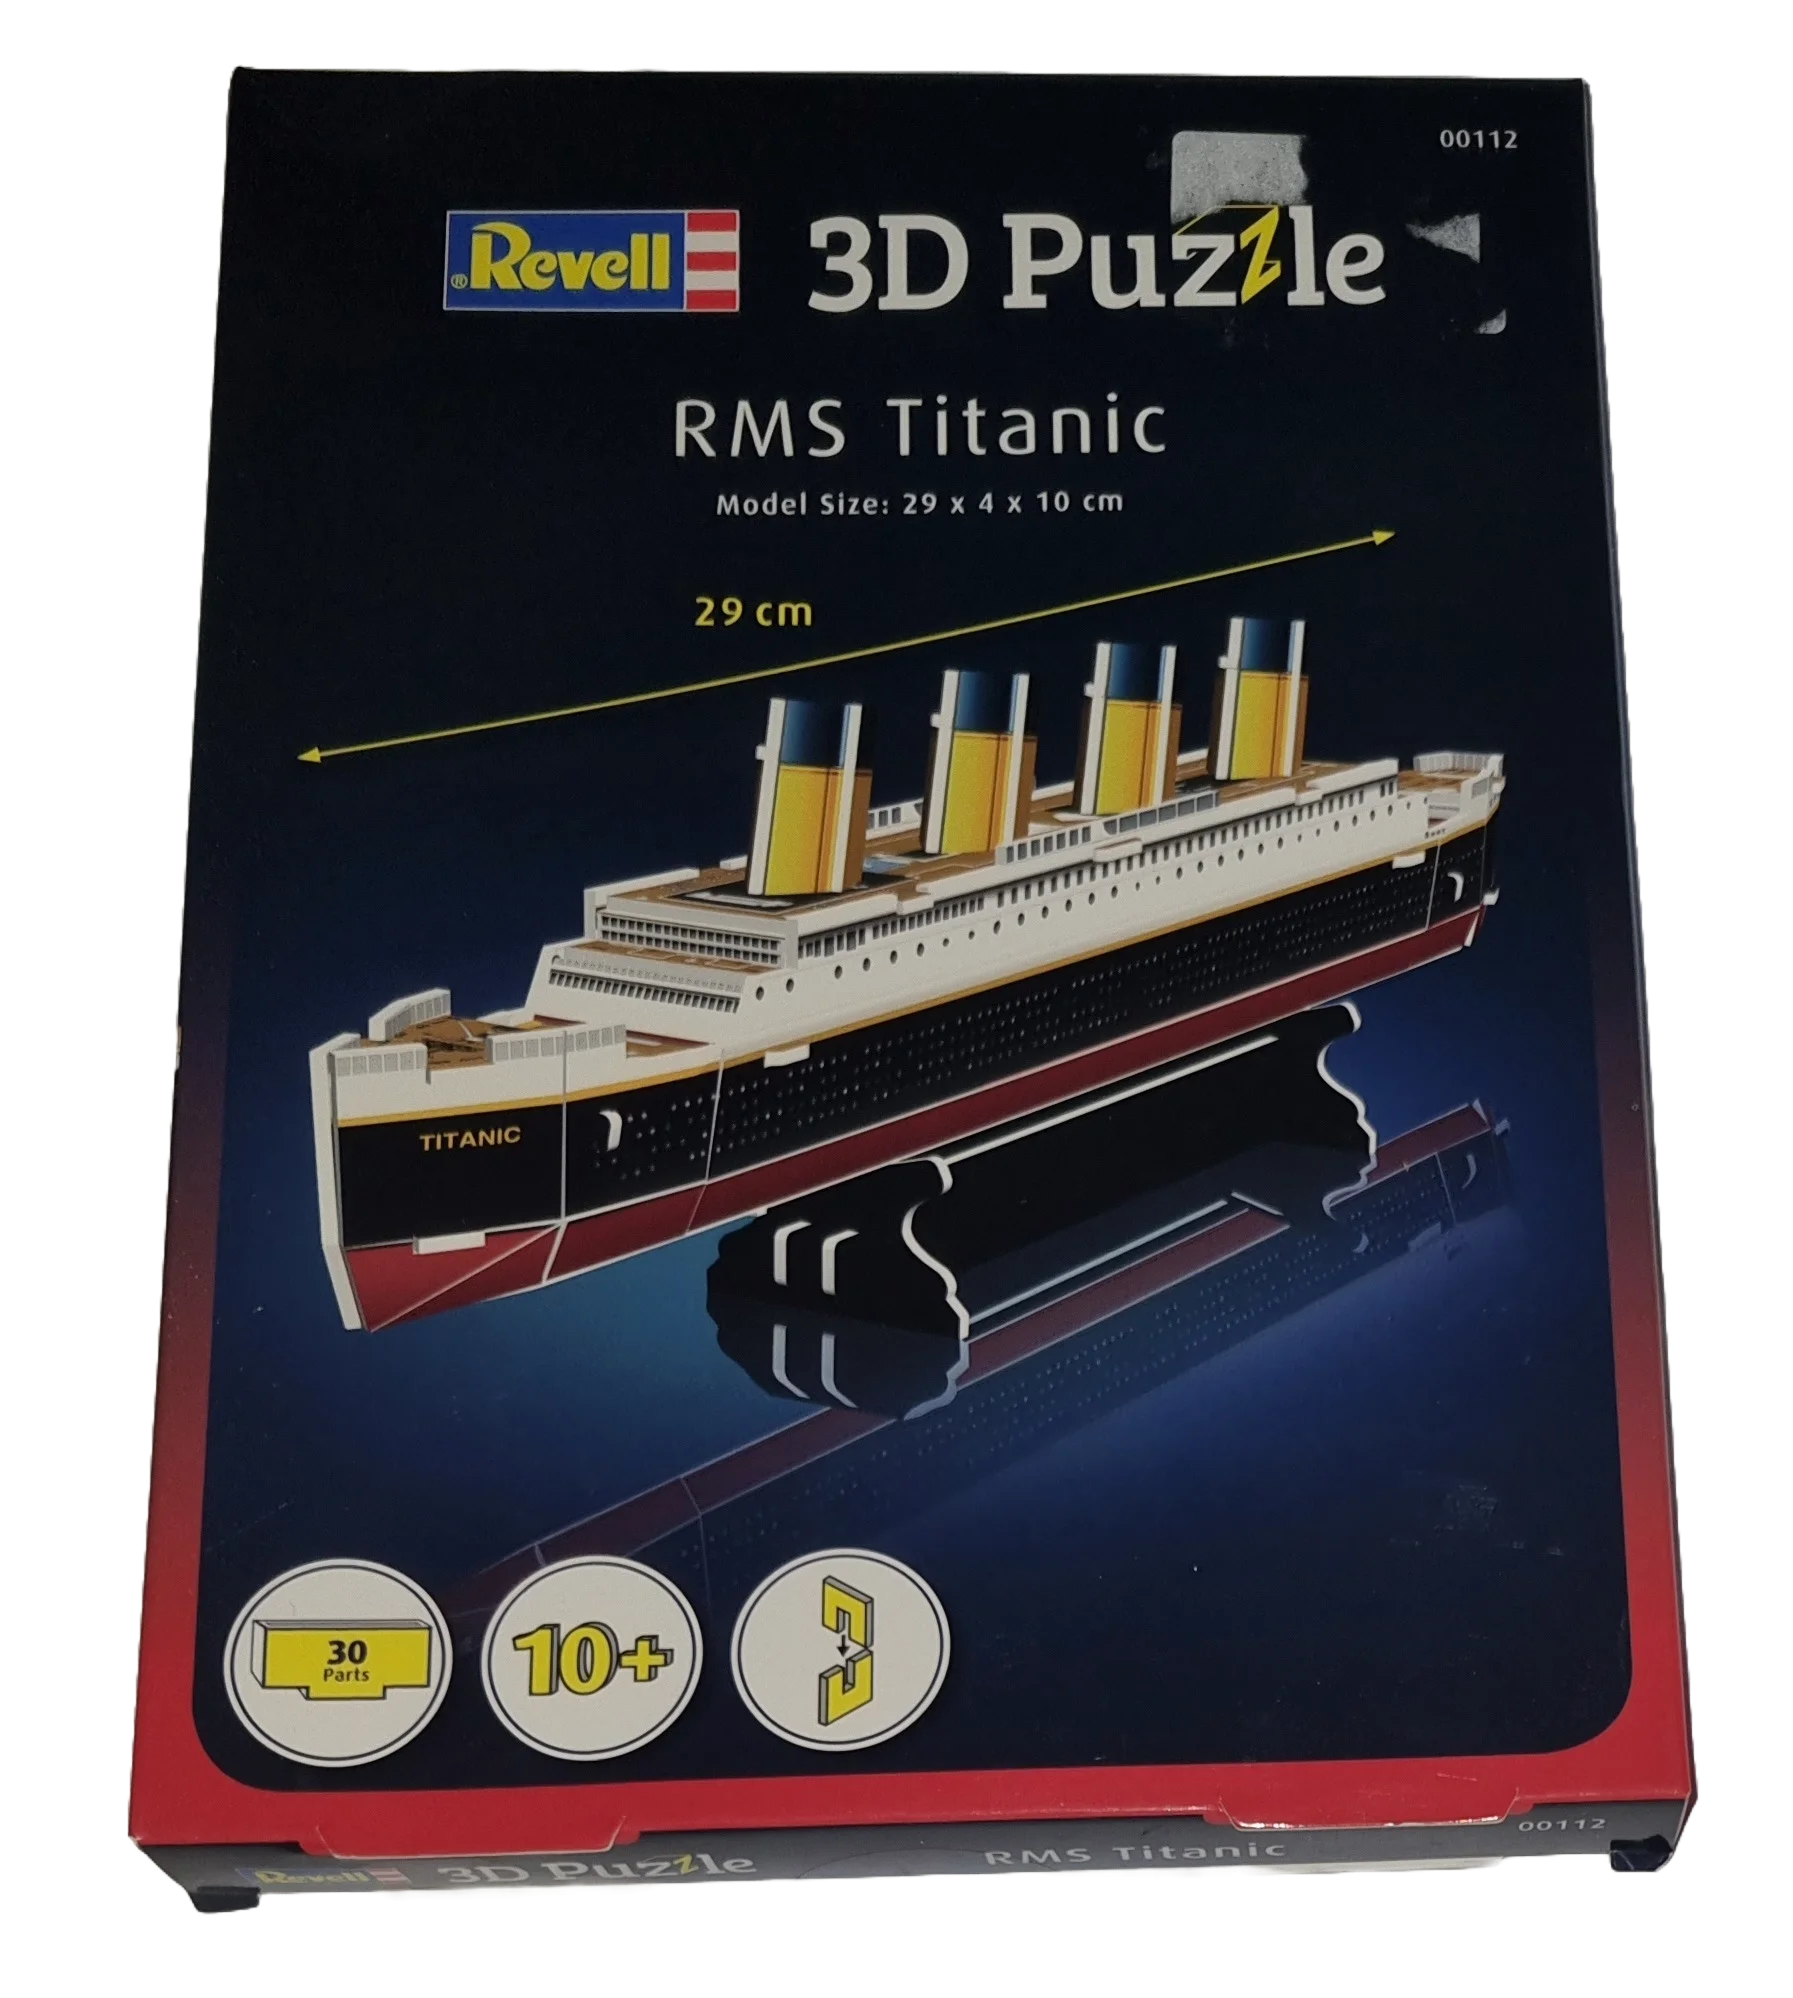 Revell 3D Puzzle RMS Titanic 00112